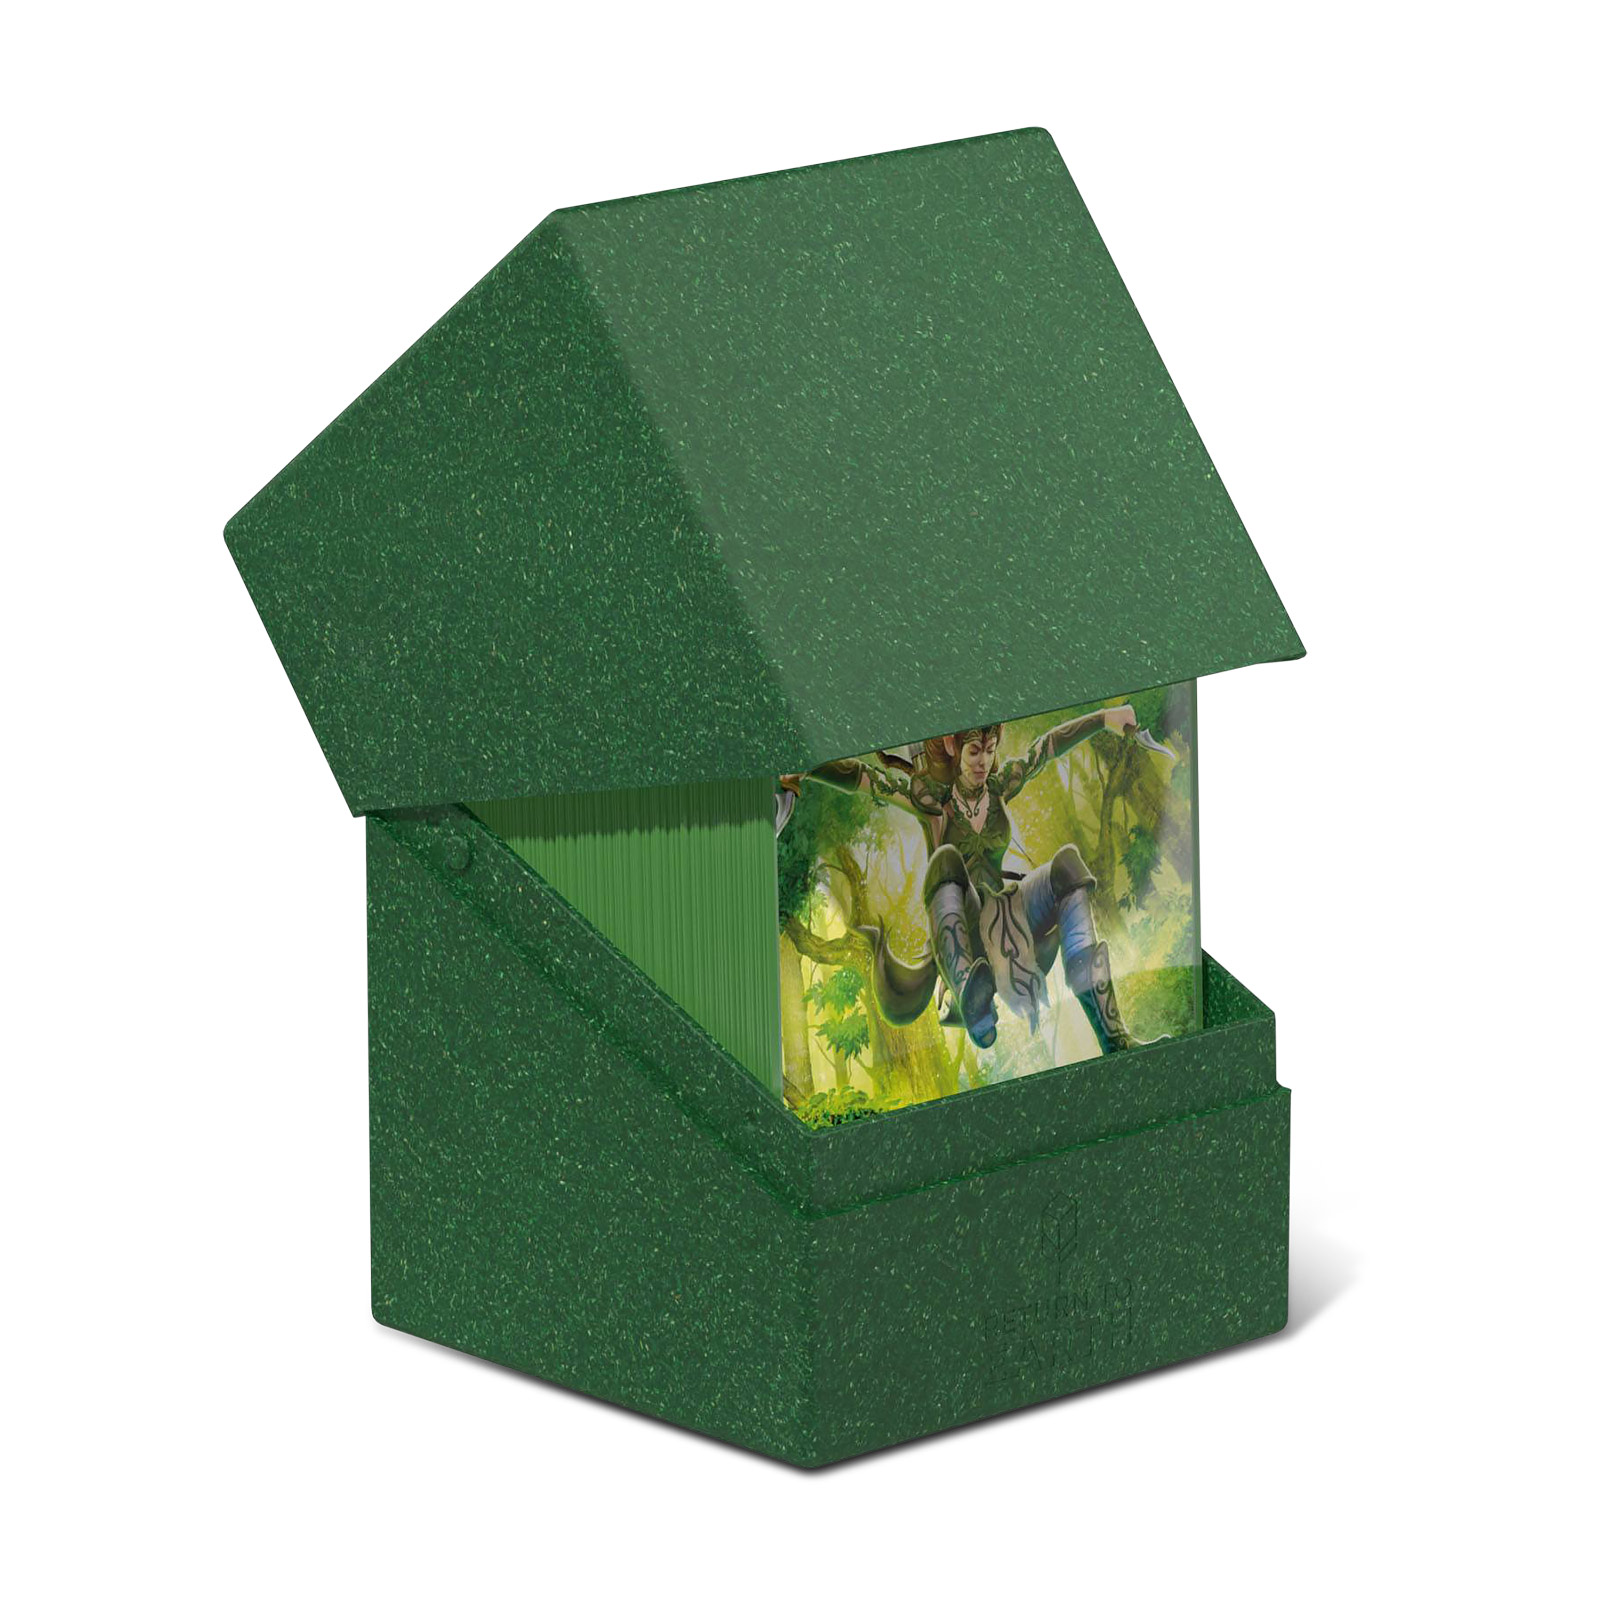 Sammelkartenbox Ultimate Guard grün für 100 Karten